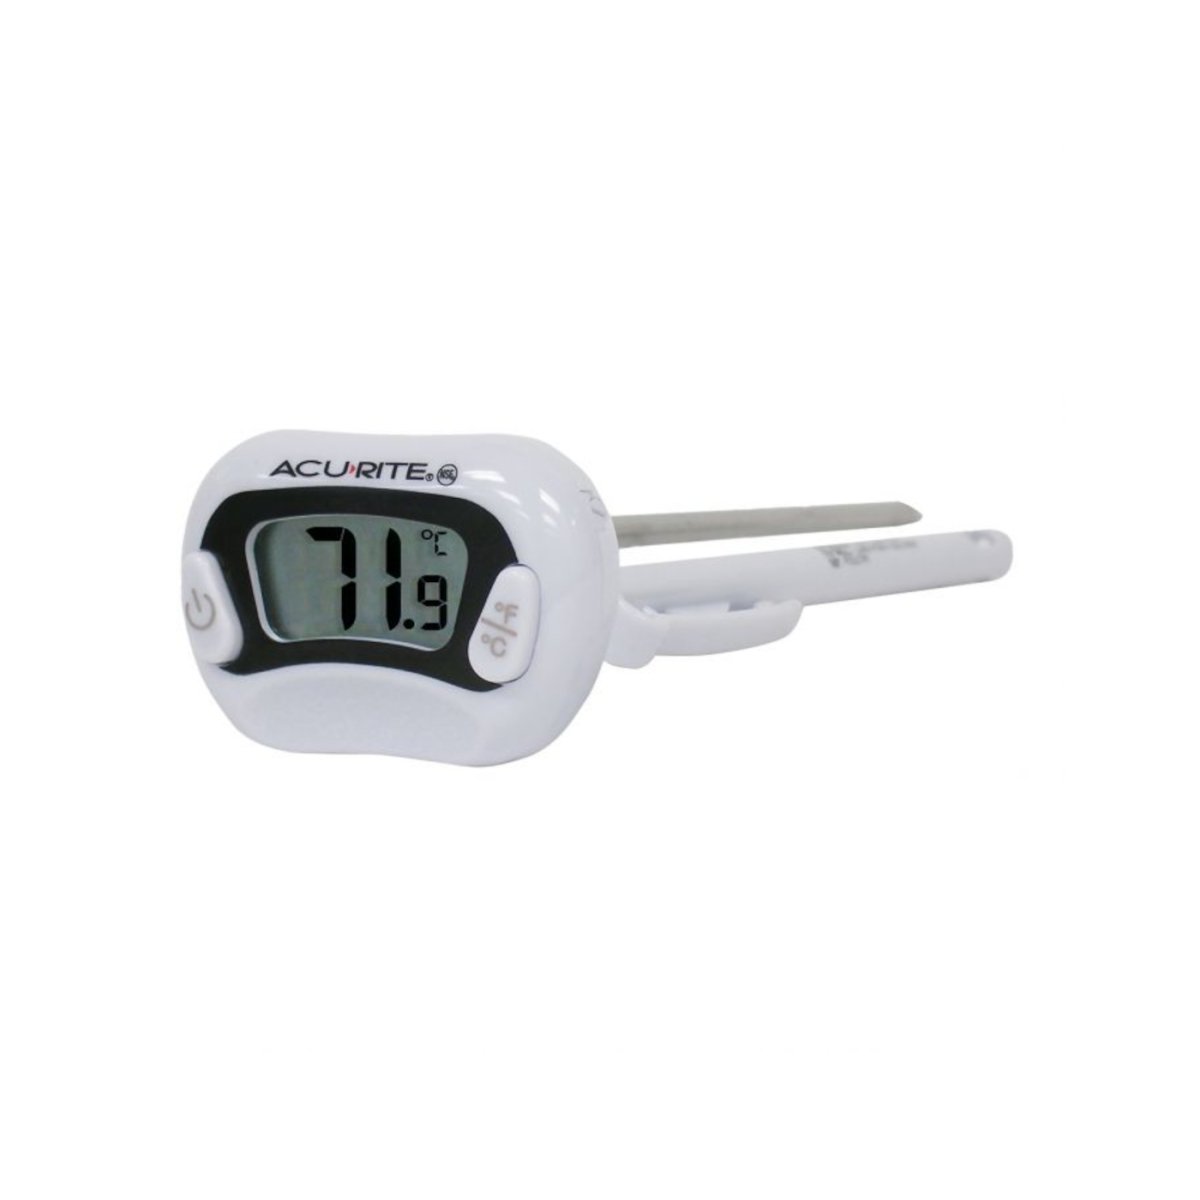 AcuRite Digital Instant Read Thermometer | Minimax